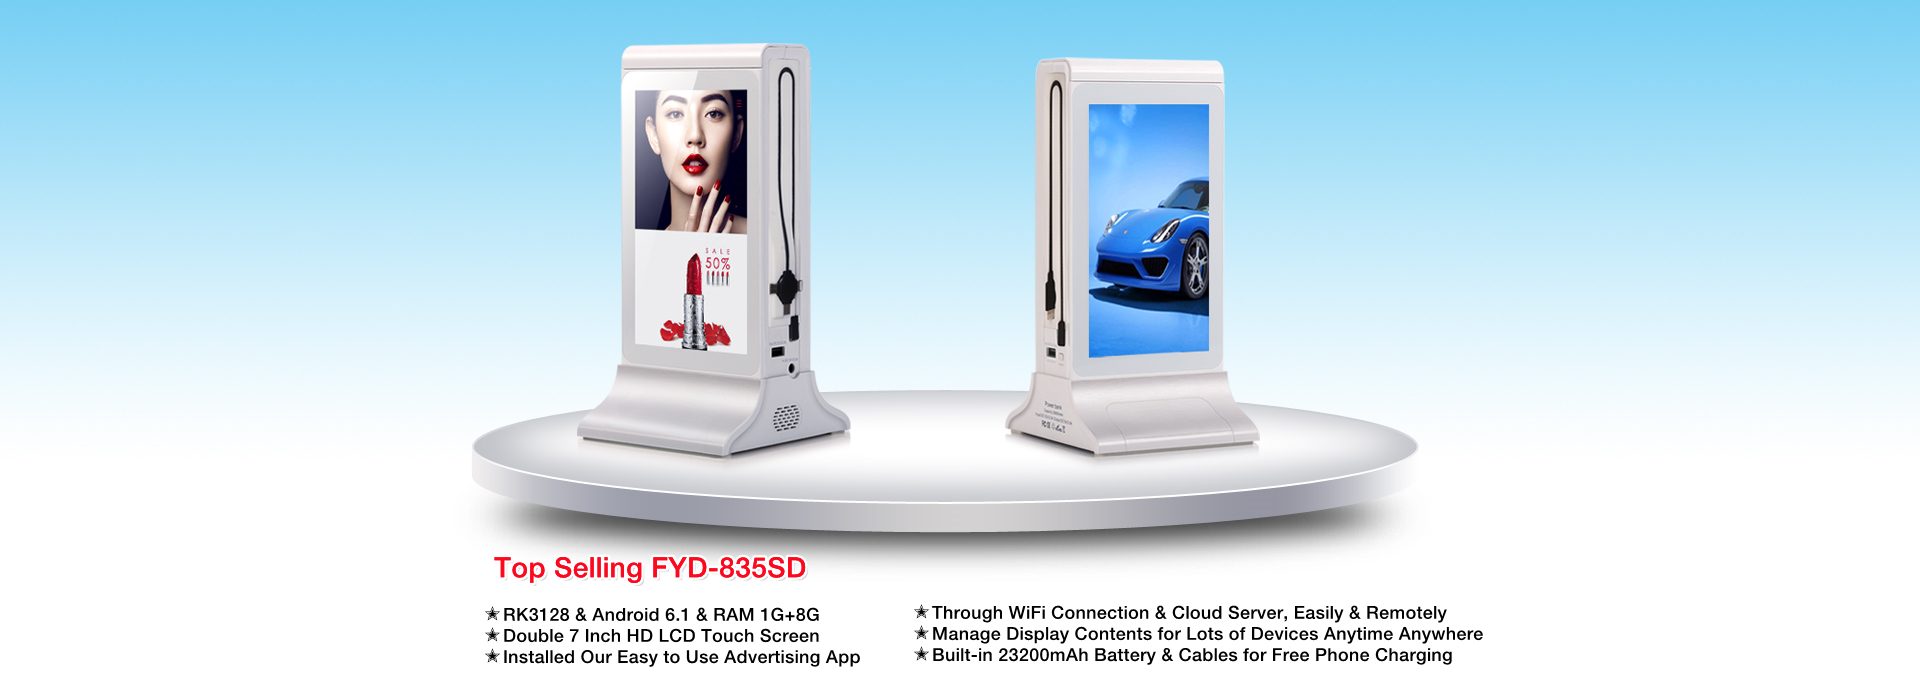 FYD-835SD WiFi Digital Table Ad Player